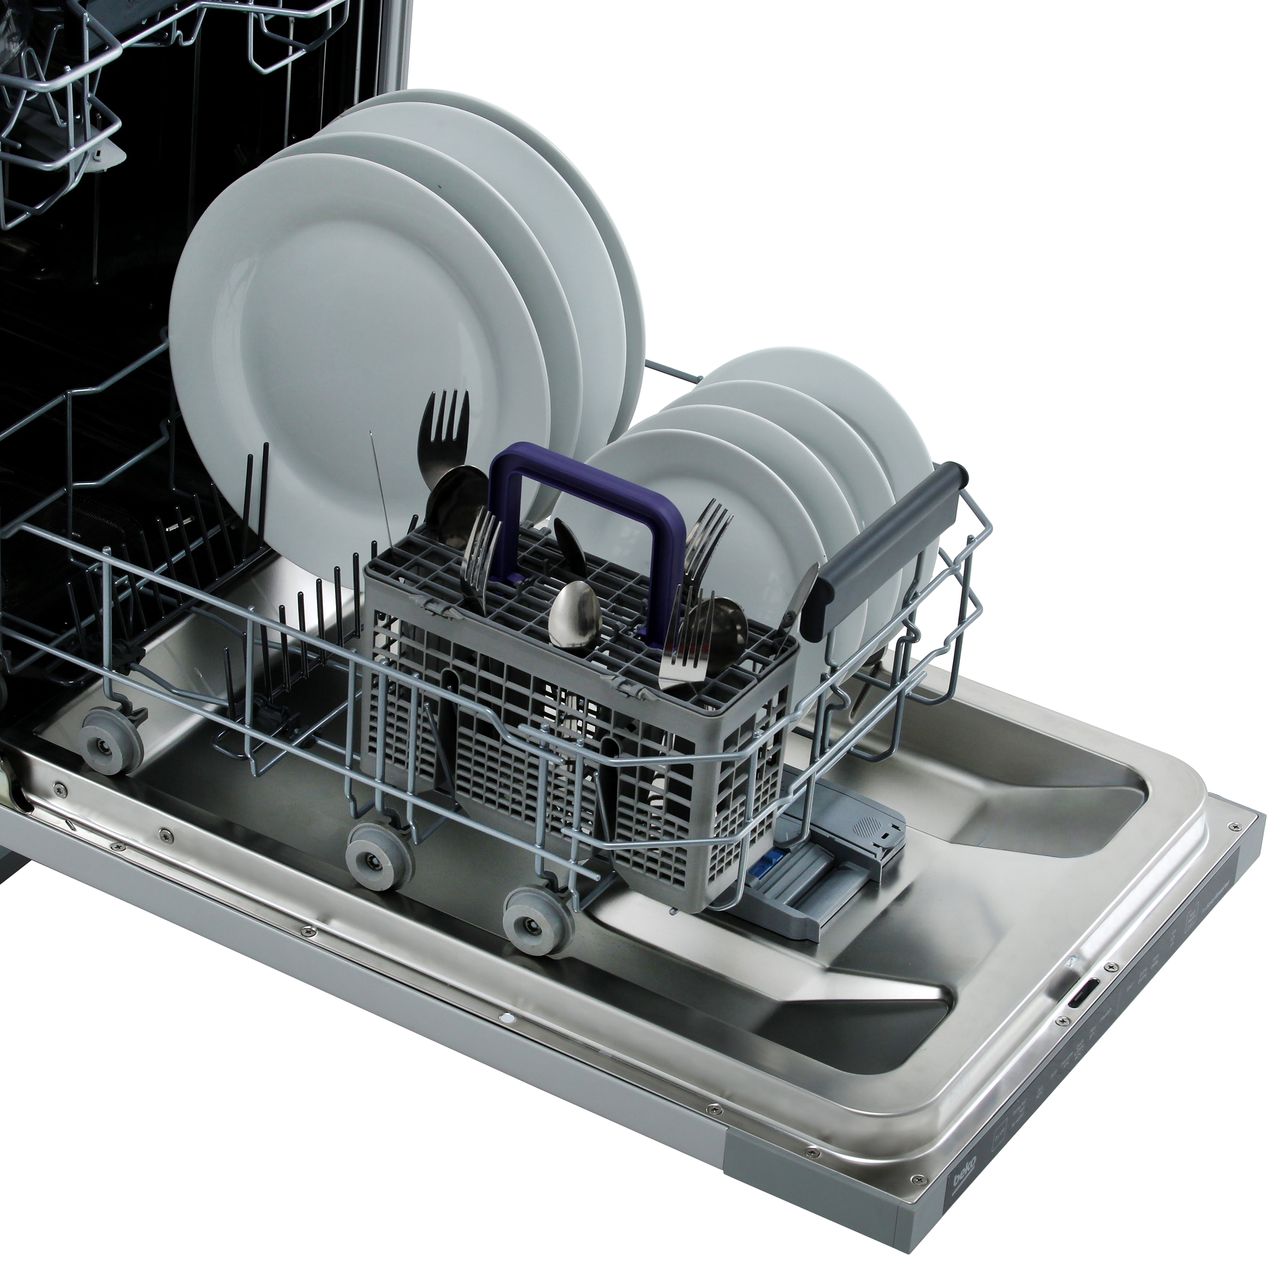 beko dishwasher front panel